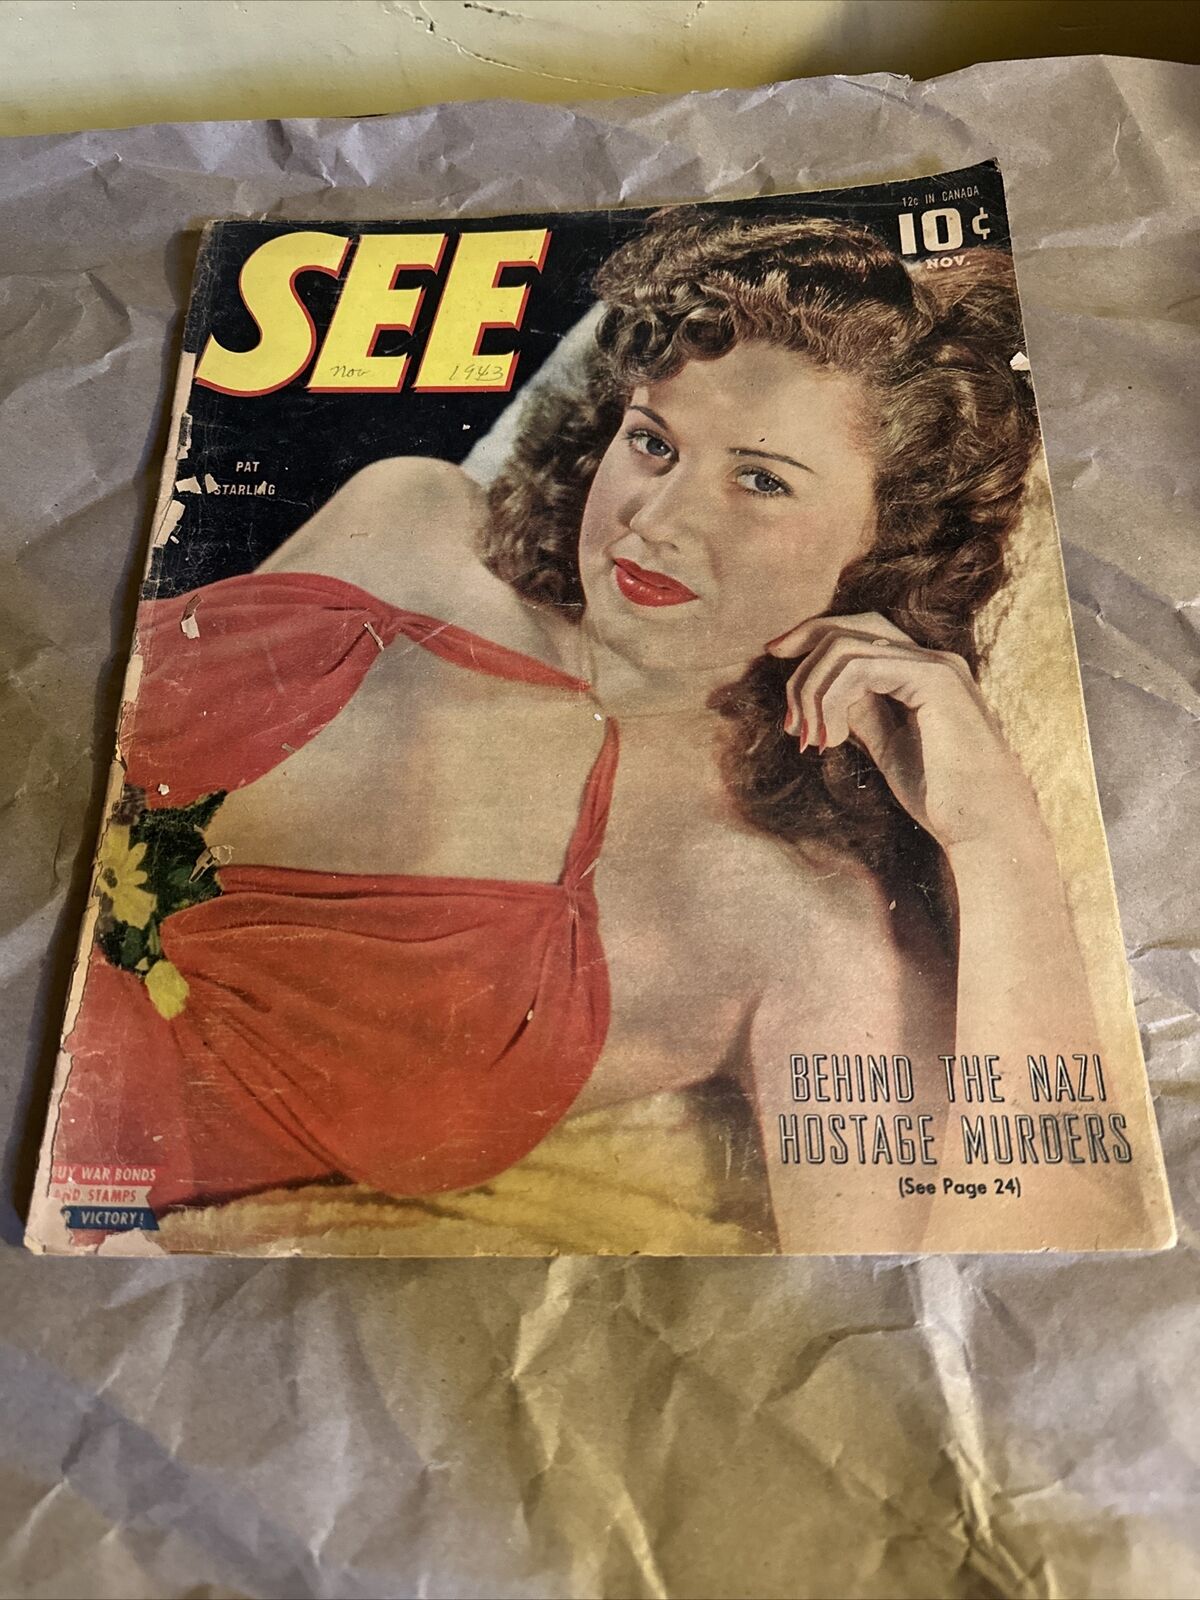 See Magazine Vol 2 #6 November 1943 Vintage Pat Starling Girl Photo Cover